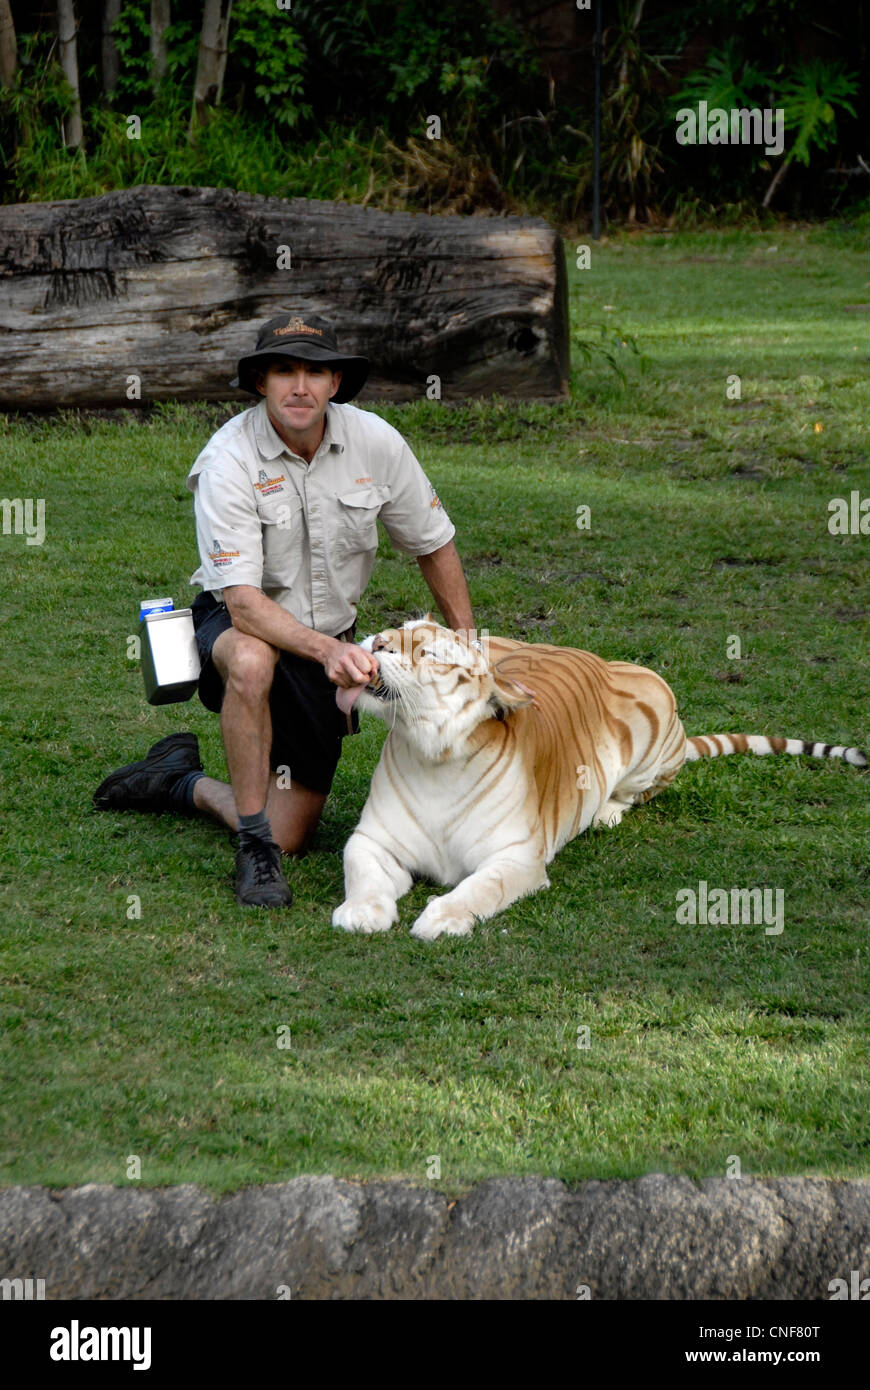 Bengal Tiger erklingt in Dreamworld Themenpark Gold Coast, Queensland, Australien Stockfoto